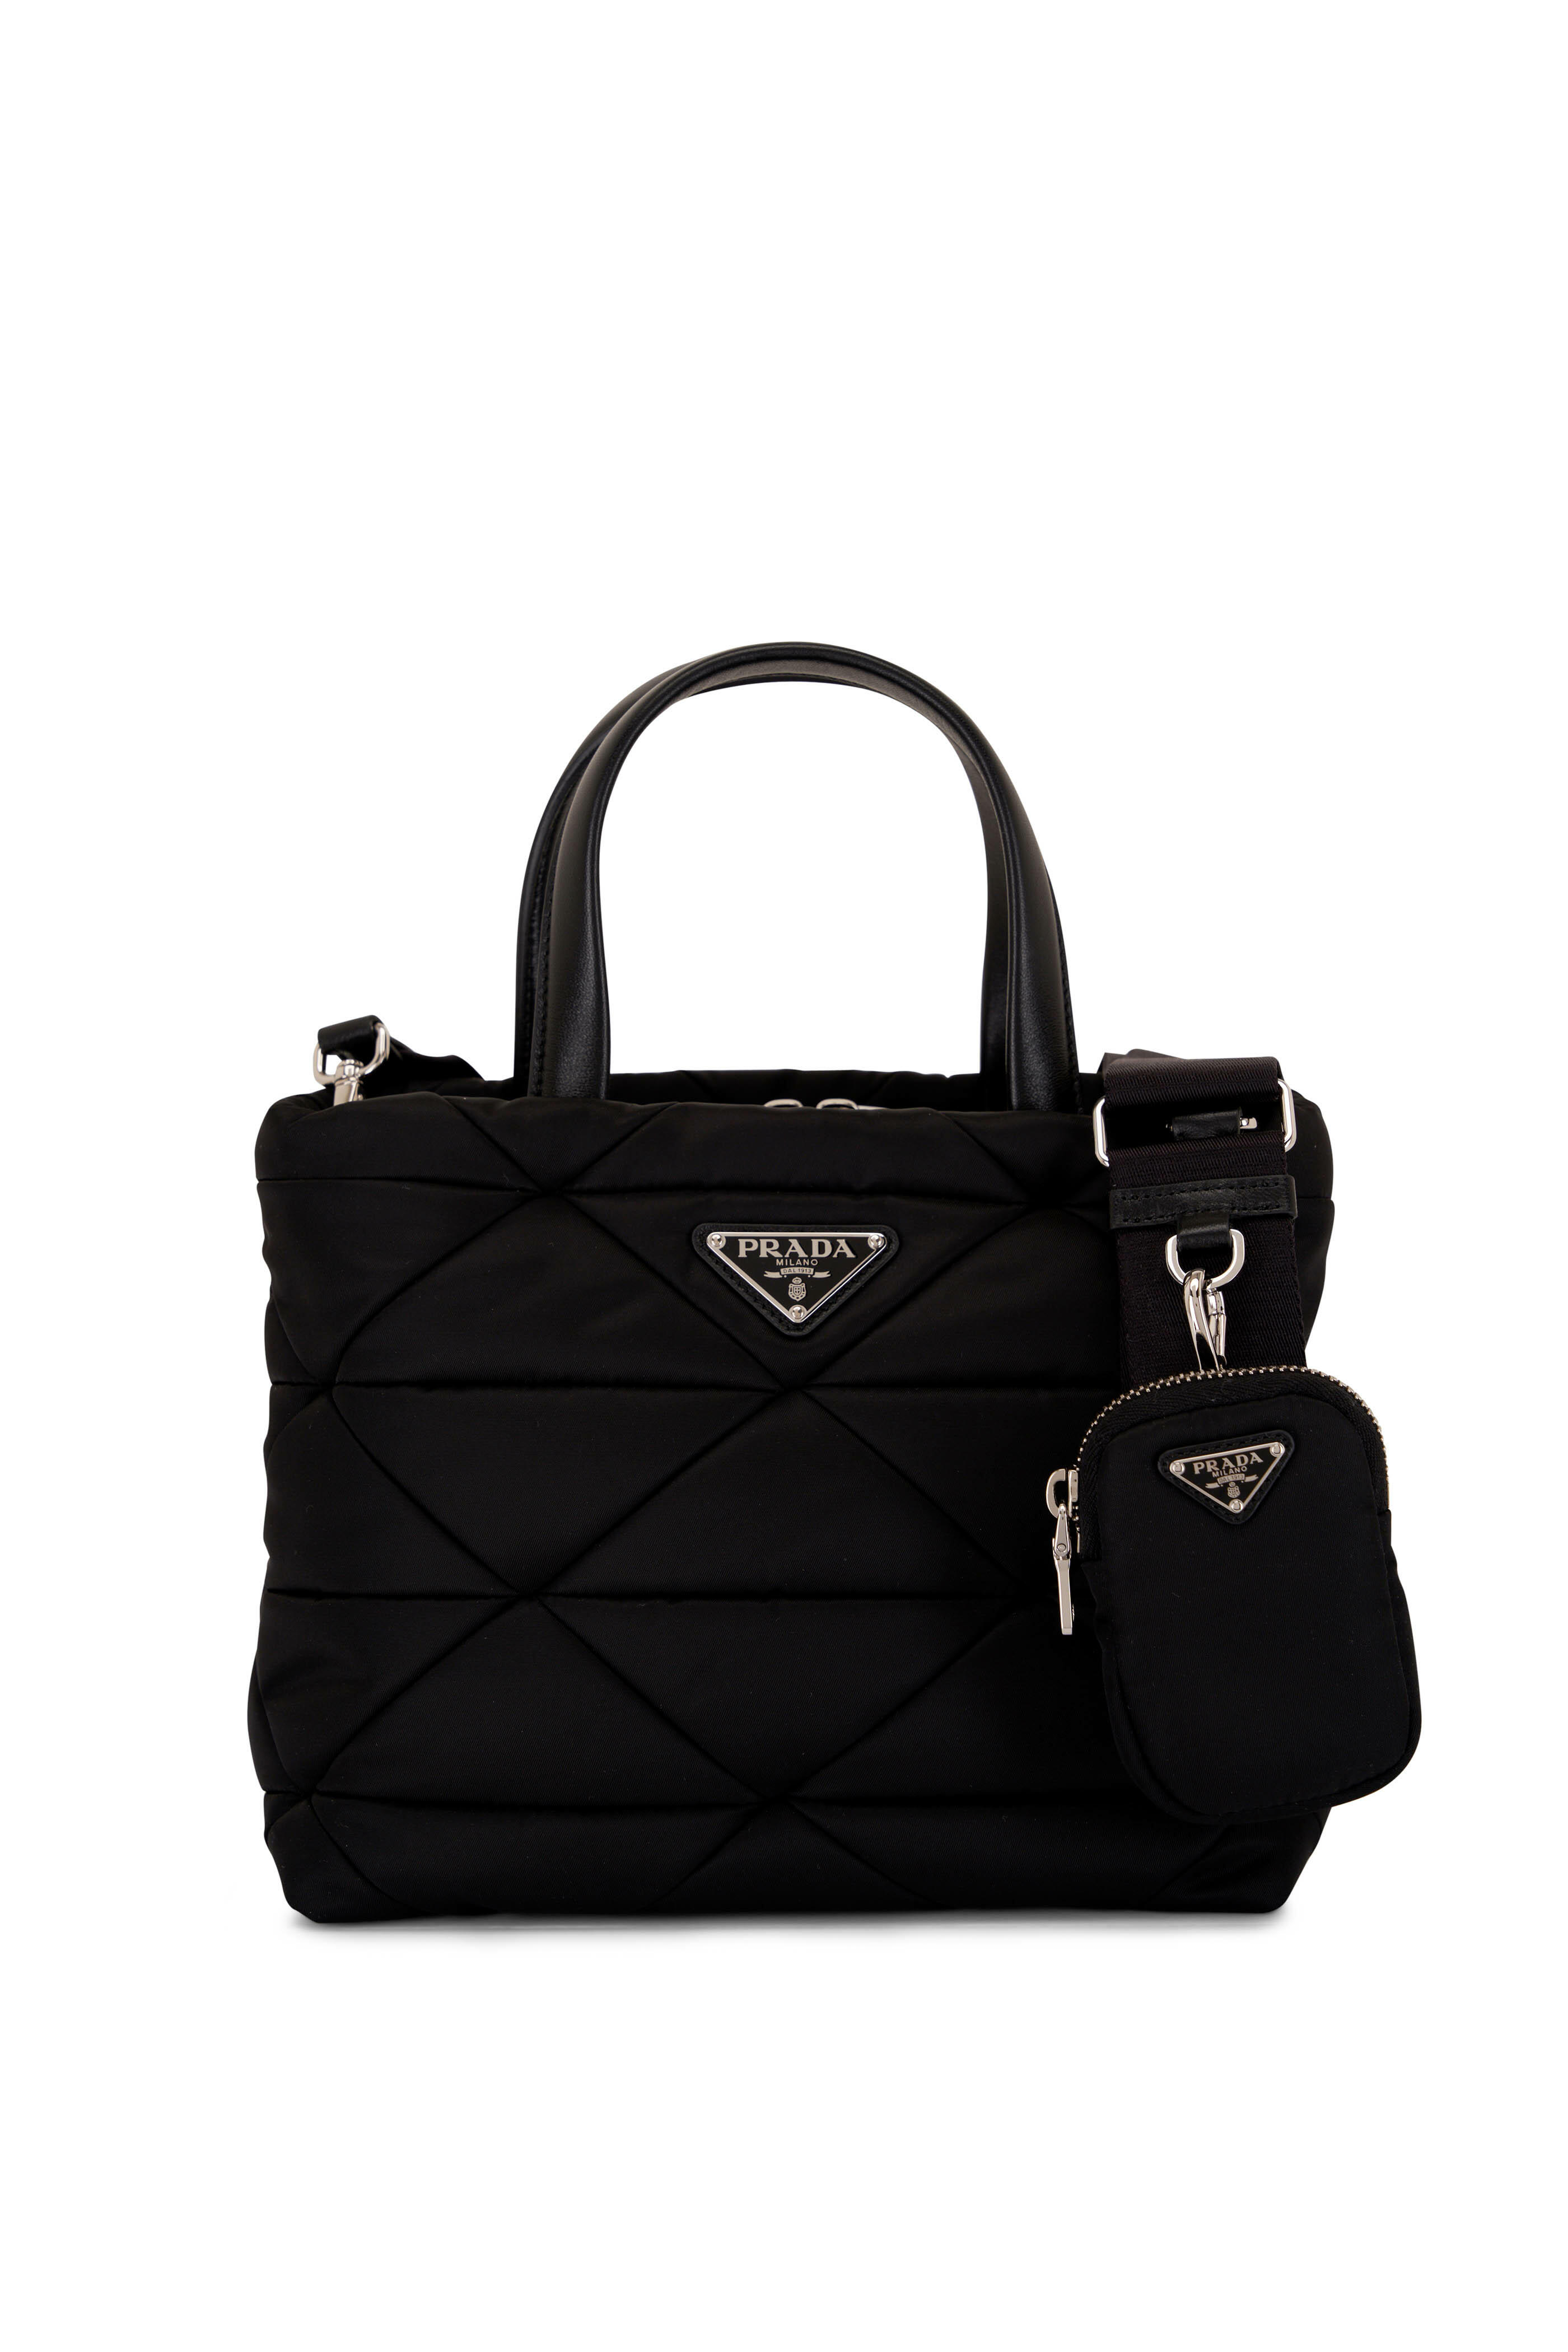 Prada - Black Padded Re-Nylon Tote Bag | Mitchell Stores